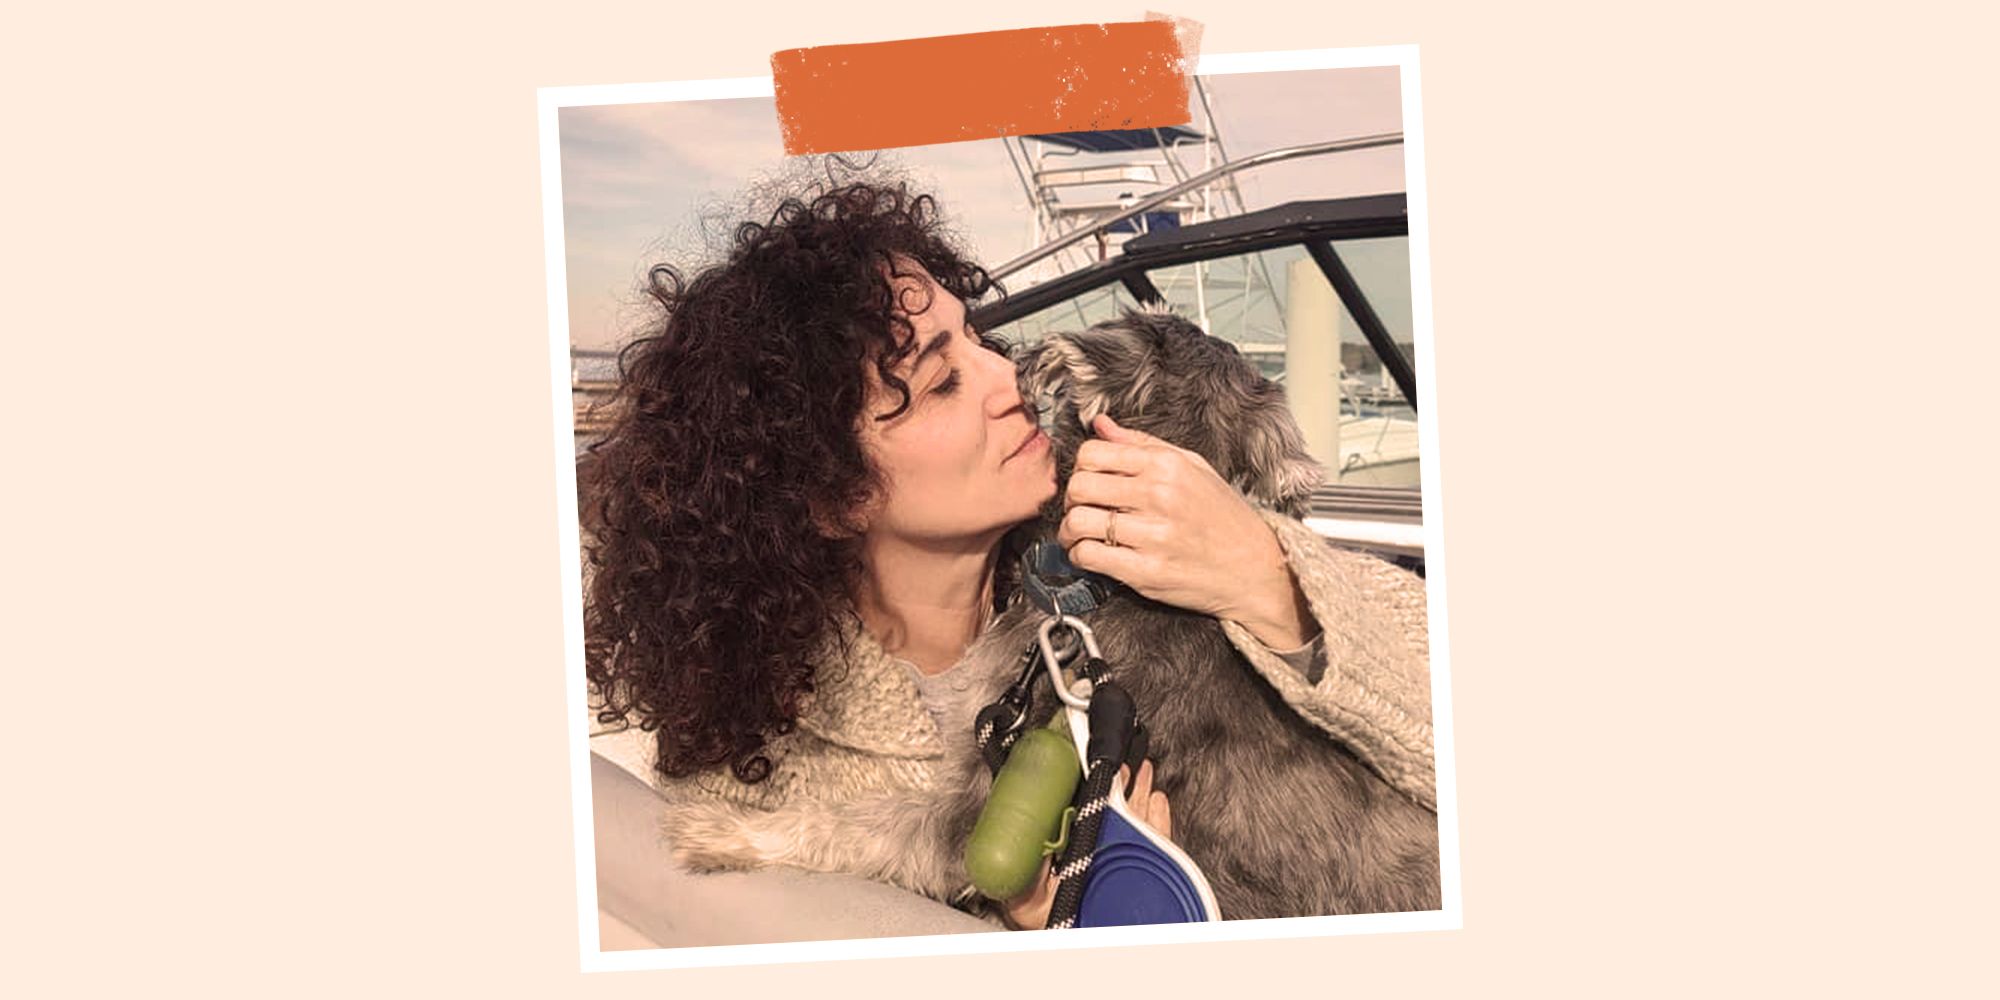 stephanie dolgoff snuggling her dog on a boat